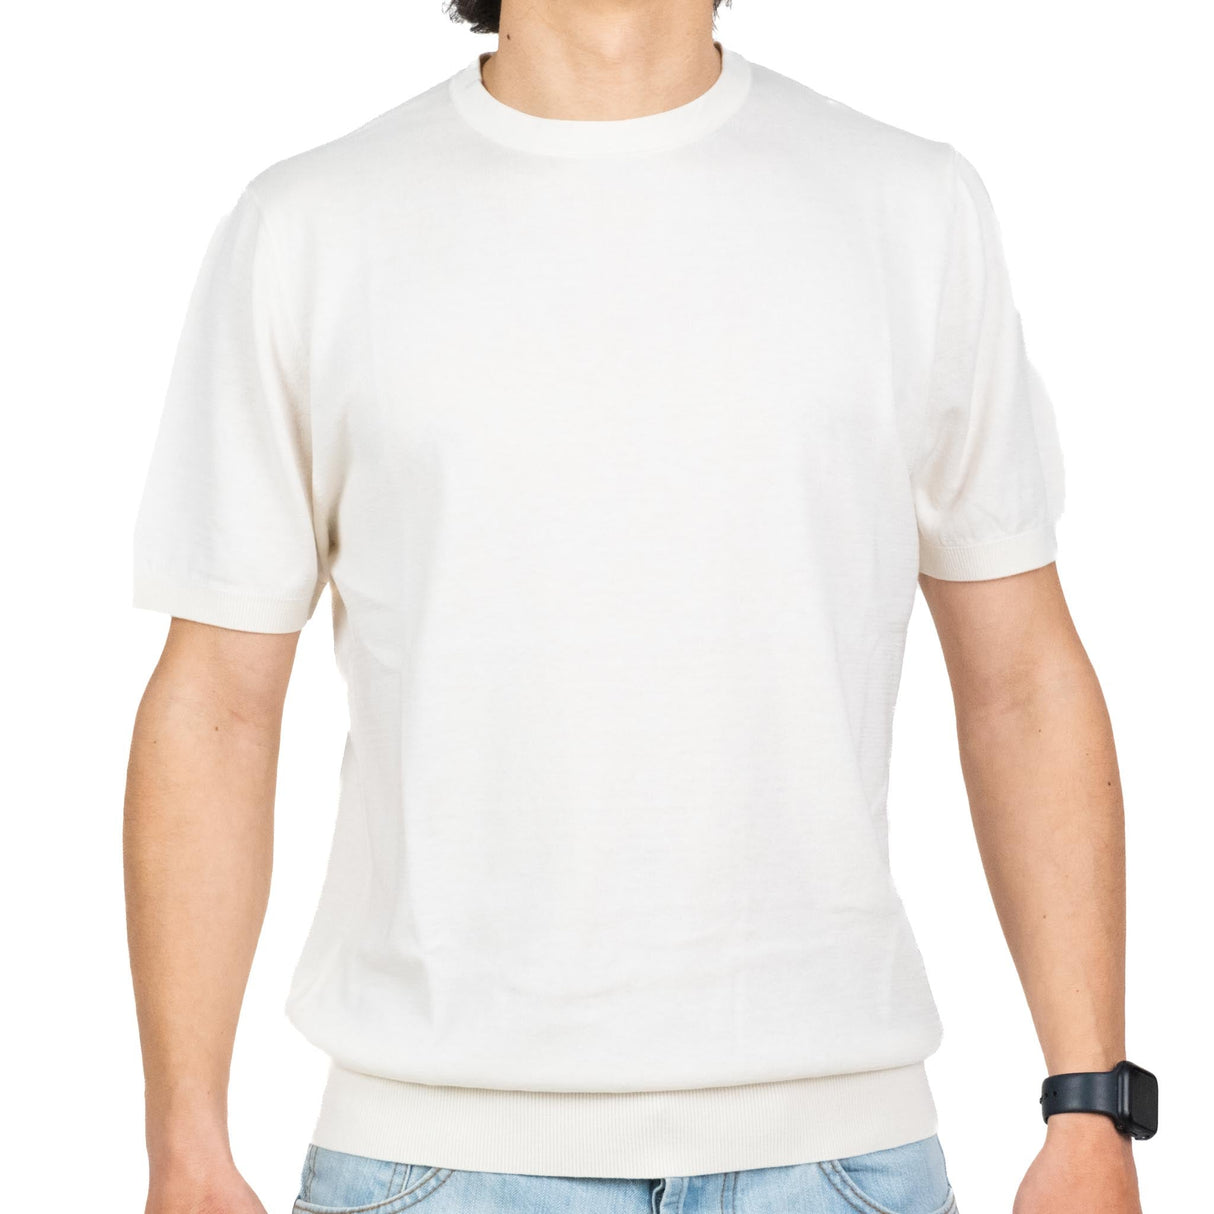 T-Shirt Pitone In Seta Panna